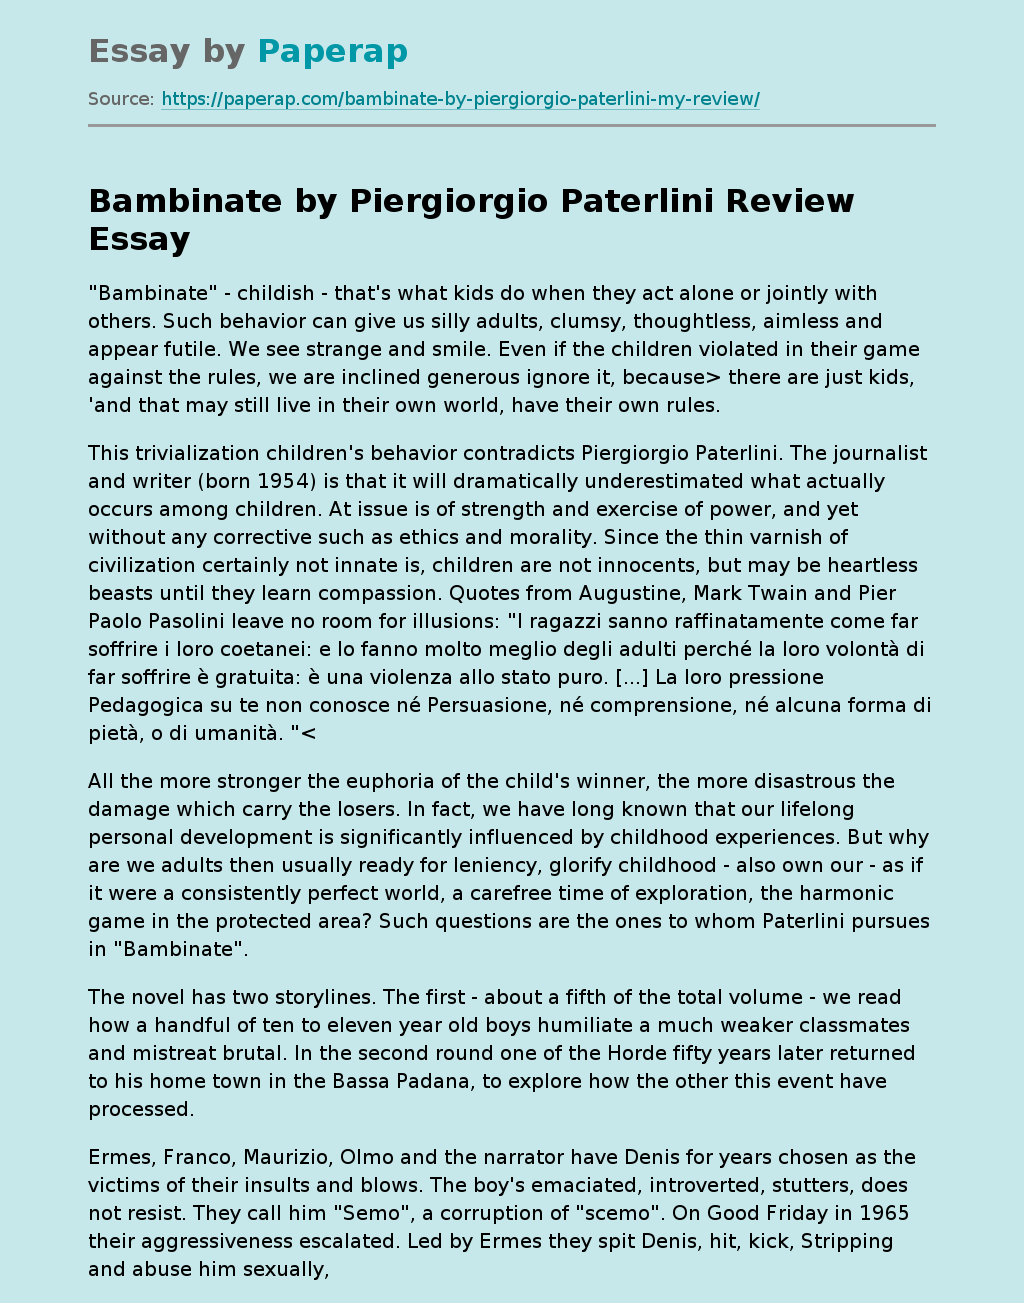 Bambinate by Piergiorgio Paterlini Review